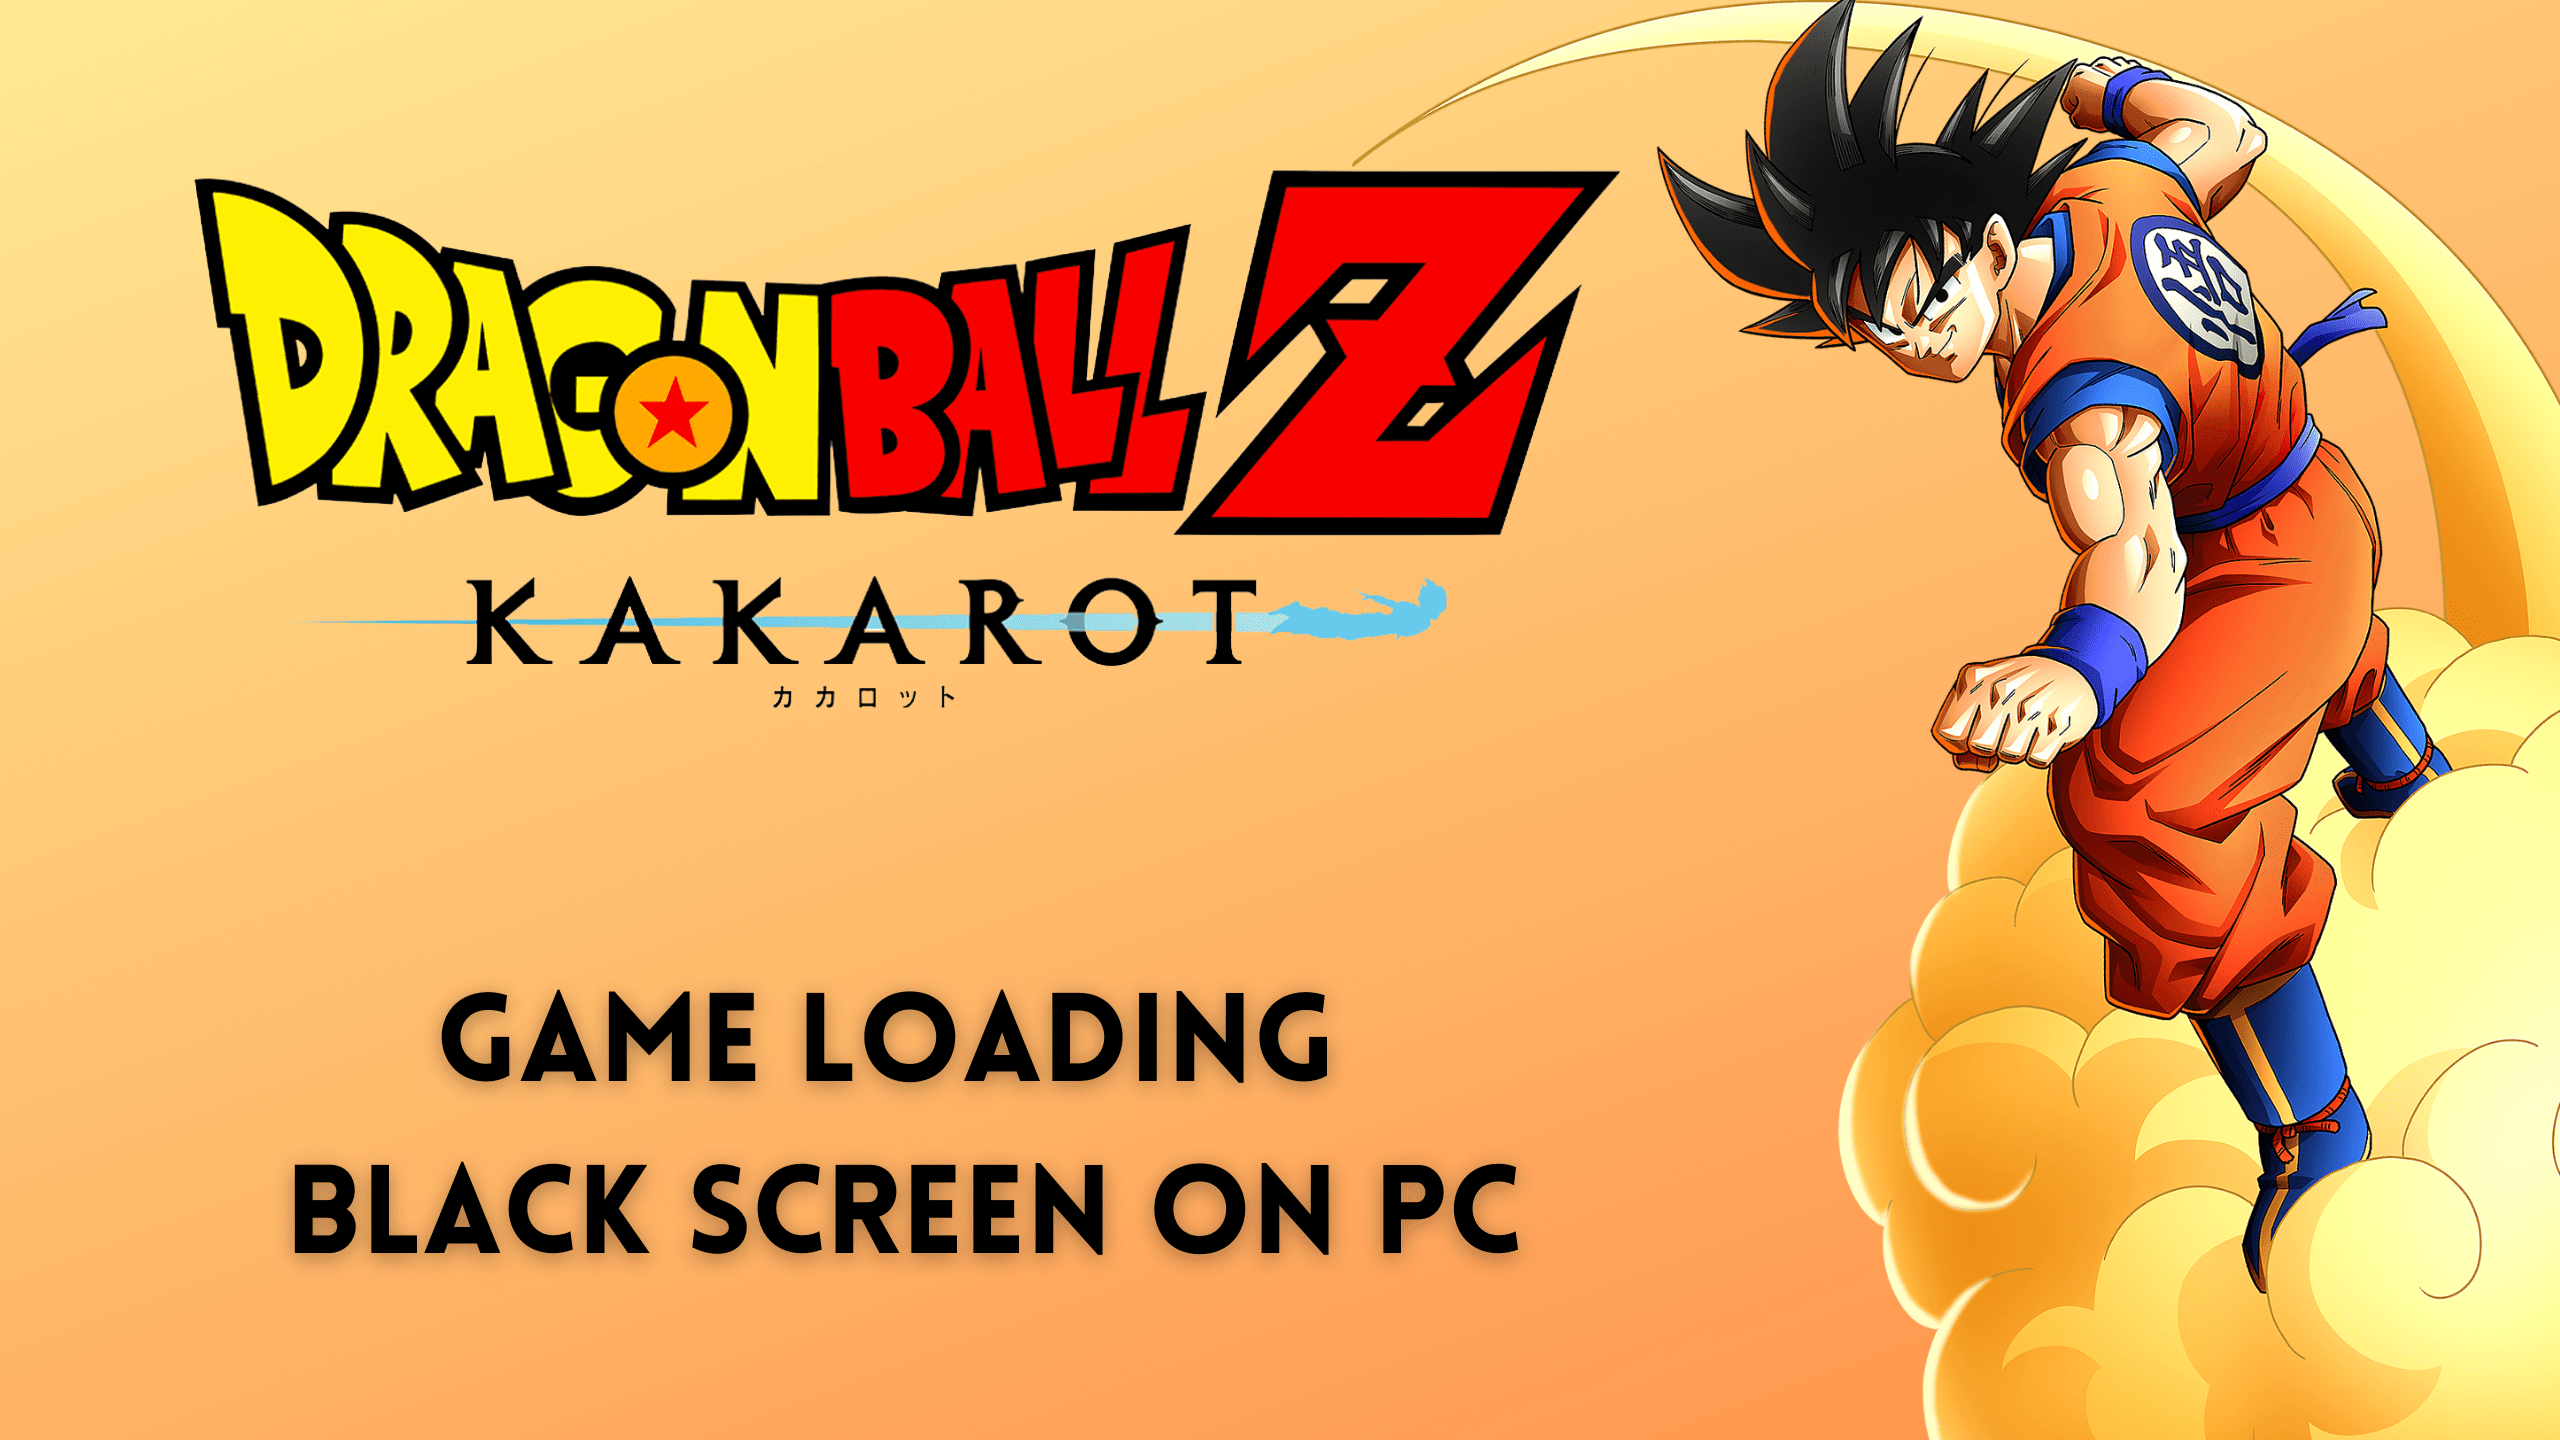 Game Loading Black Screen Dragon Ball Z Kakarot PC